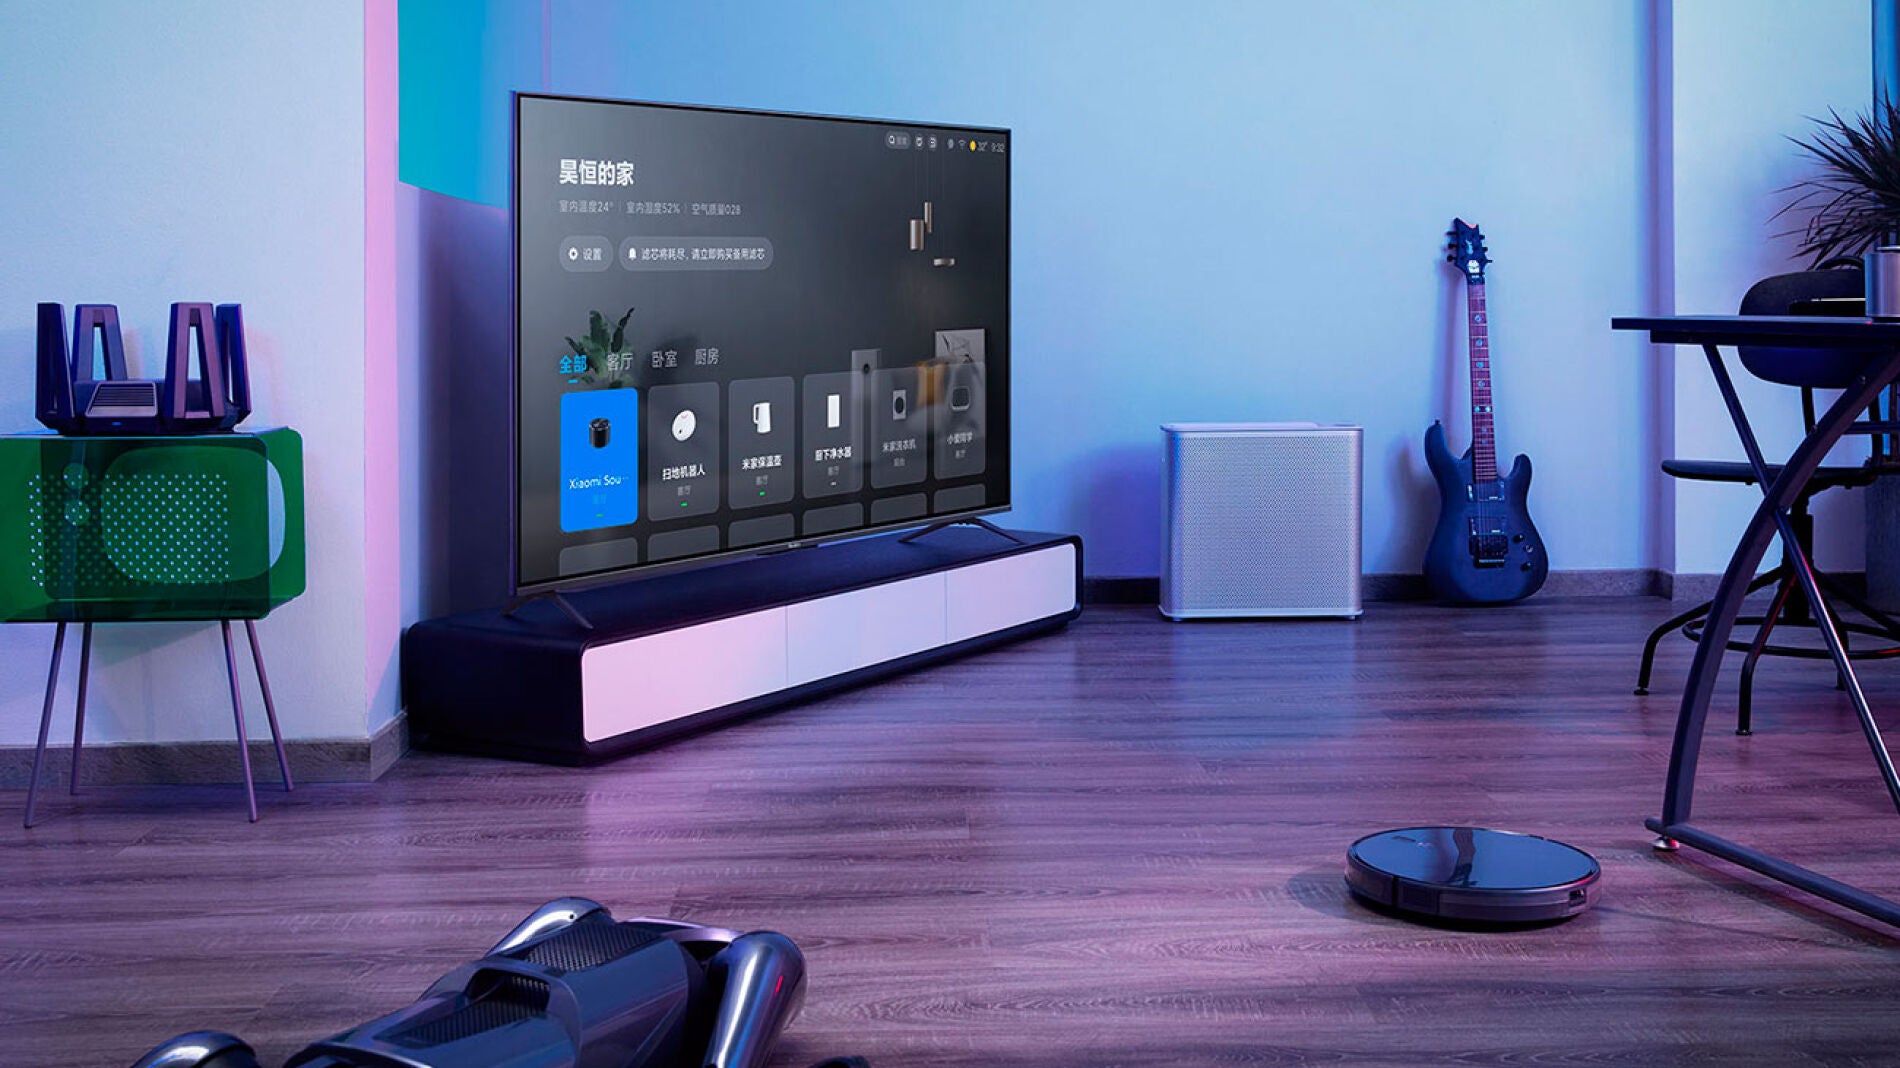 Redmi Smart Tv X